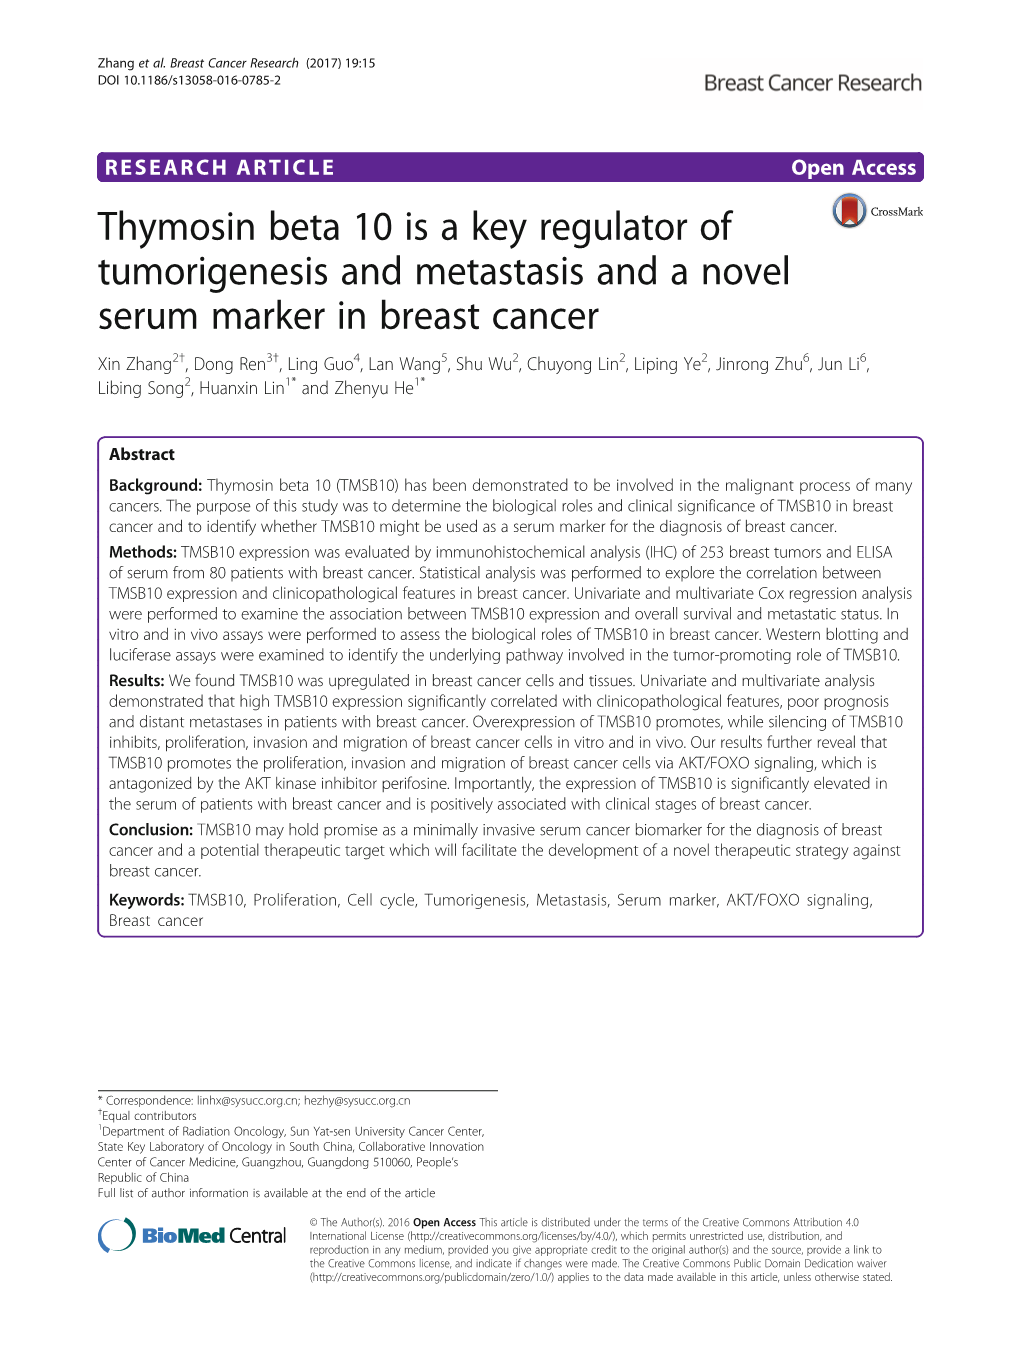 Thymosin Beta 10 Is a Key Regulator of Tumorigenesis and Metastasis And